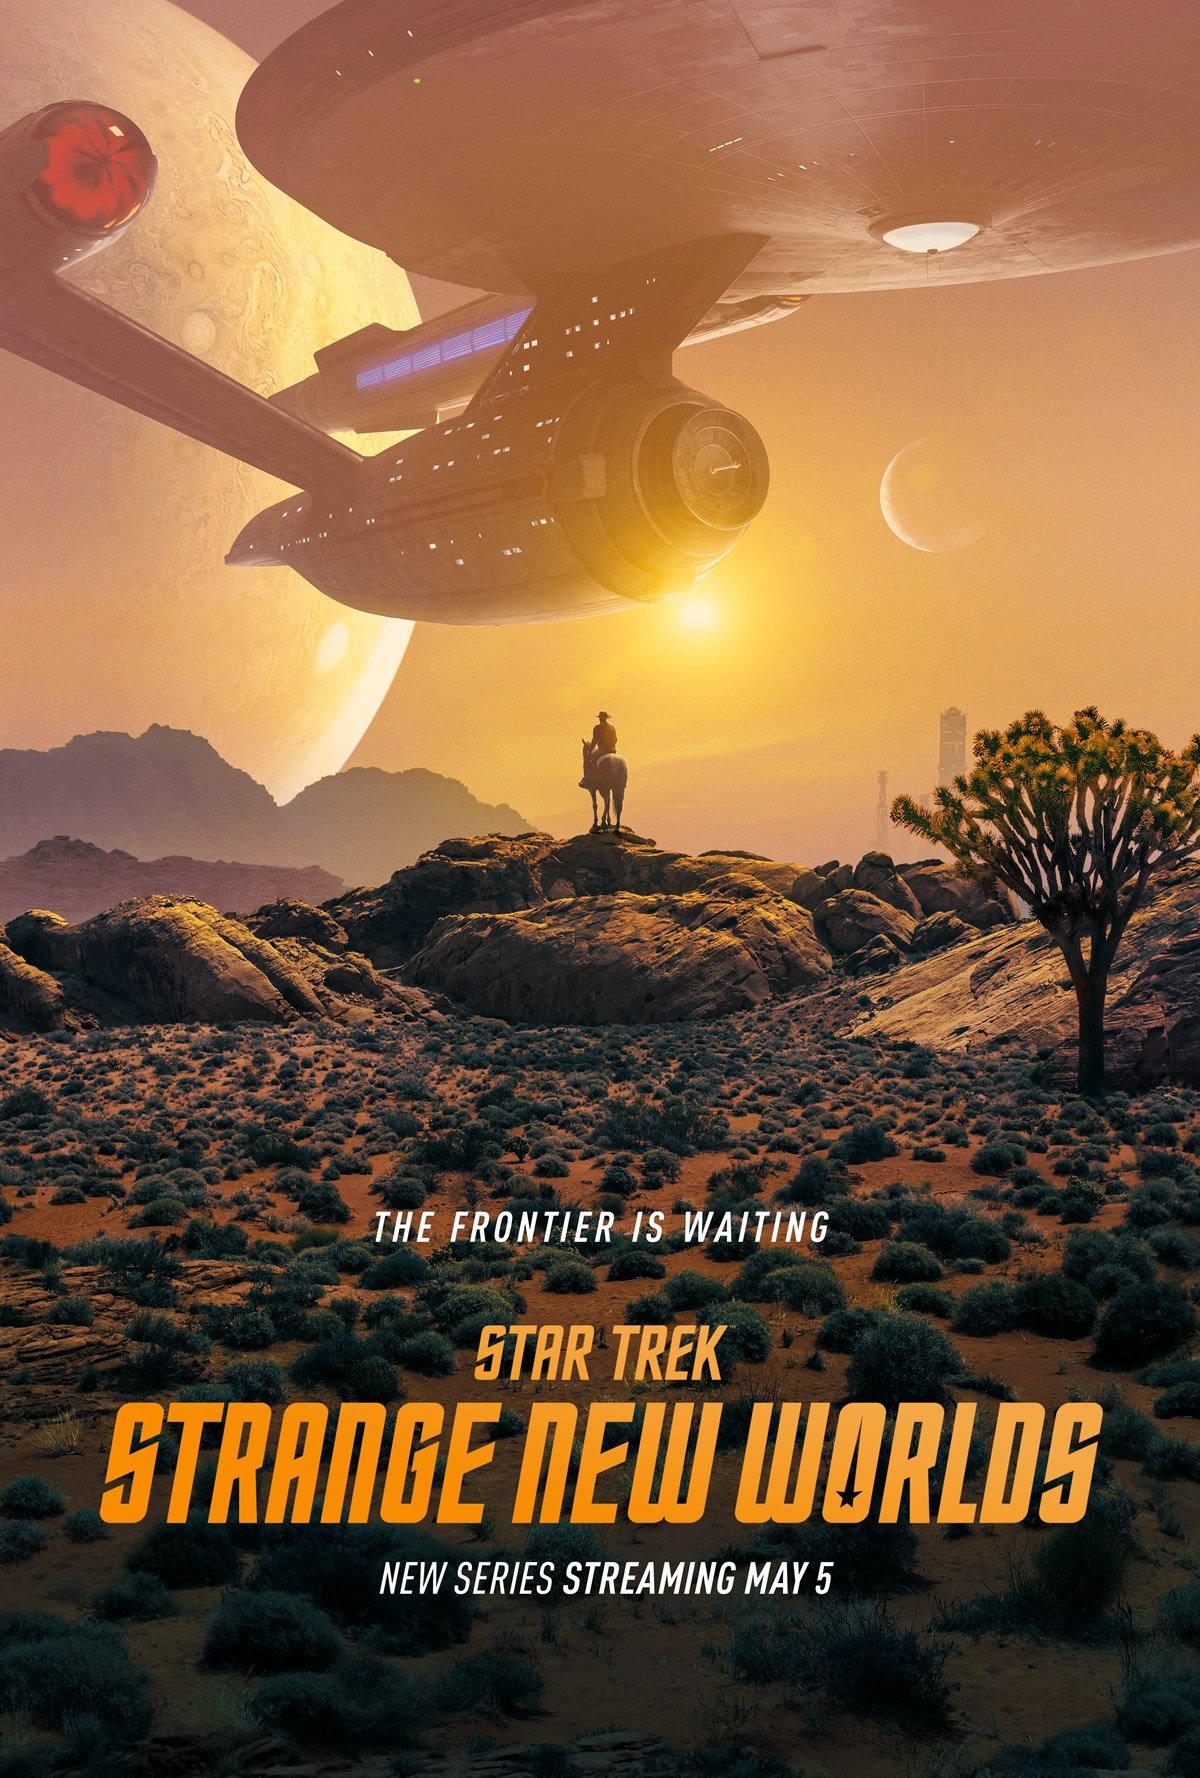 Star Trek: Strange New Worlds Pôster - Trailer da série spinoff de Star Trek divulgada pela Paramount Plus